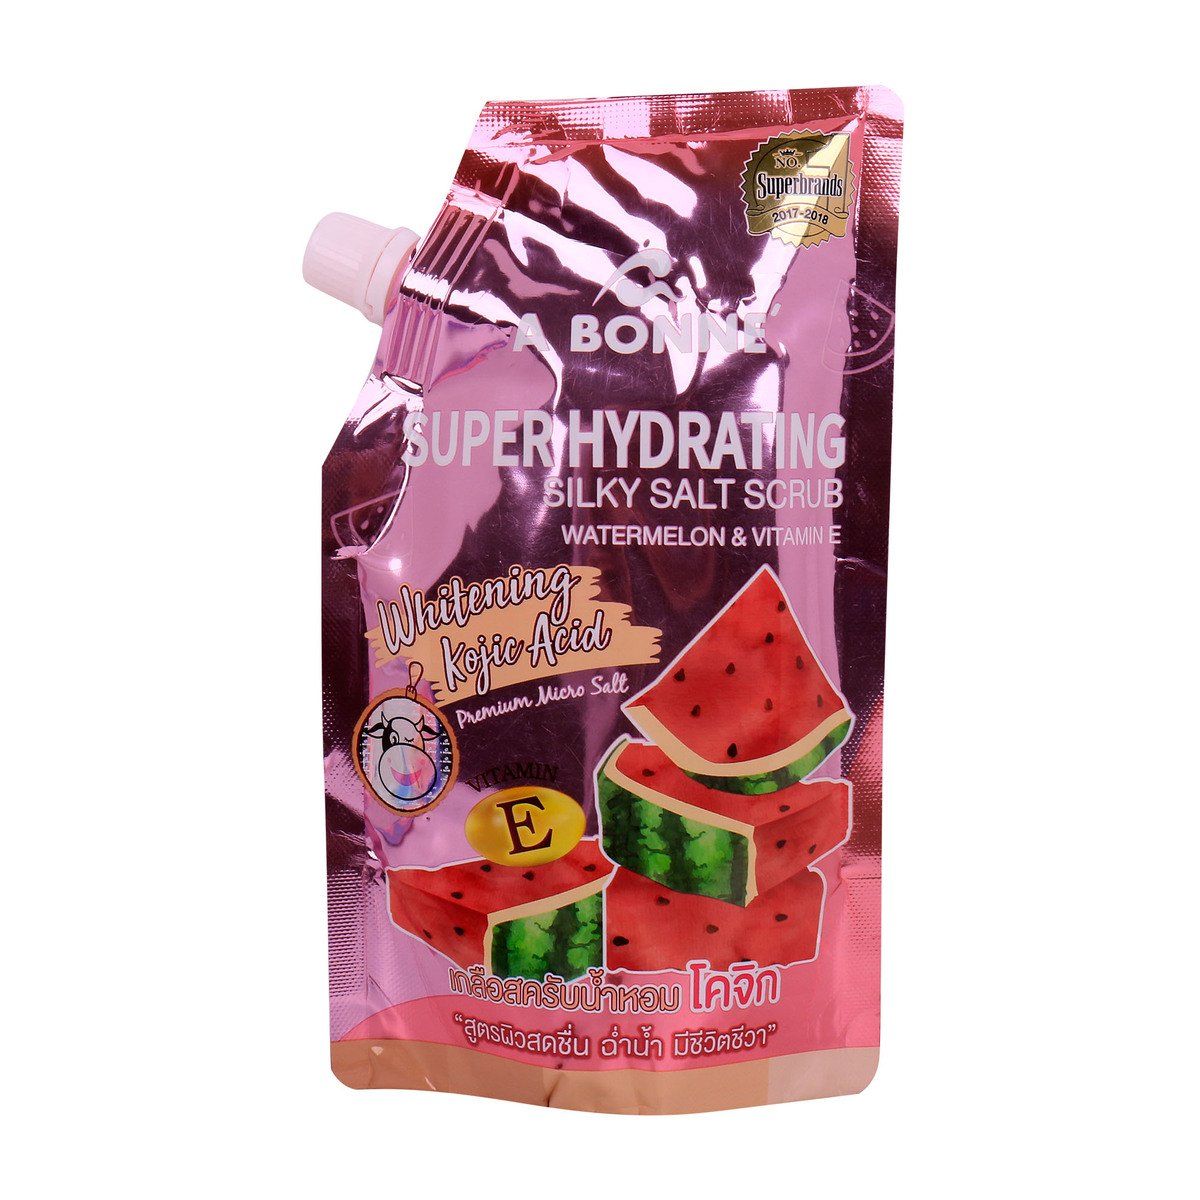 A Bonne Watermelon & Vitamin E Super Hydrating Silky Salt Scrub 350 g